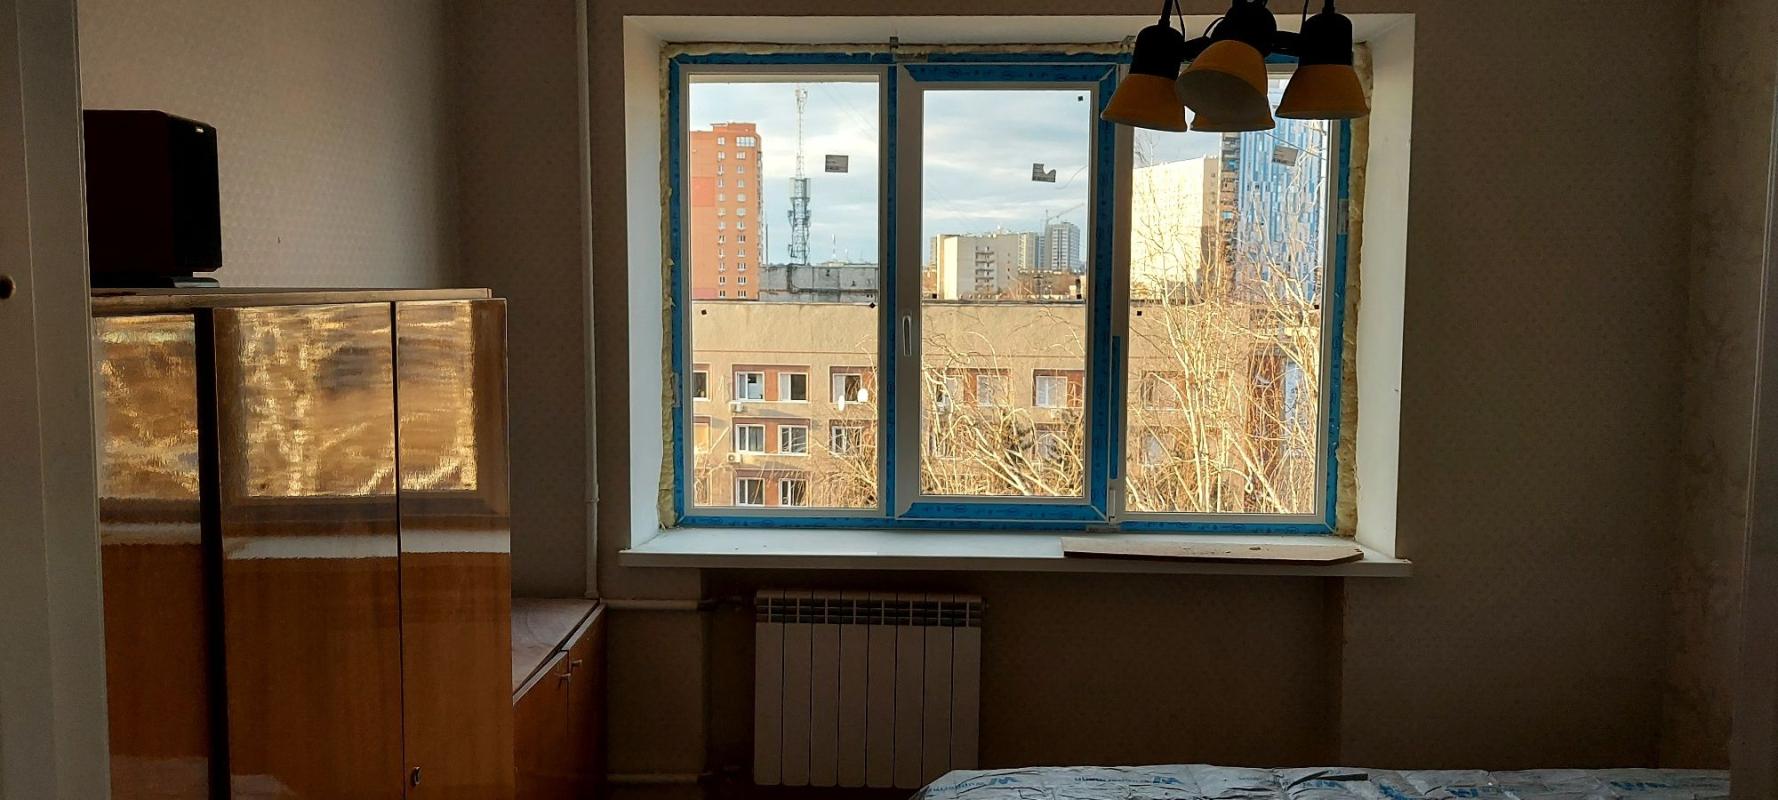 Долгосрочная аренда 2 комнатной квартиры Новгородская ул. 6